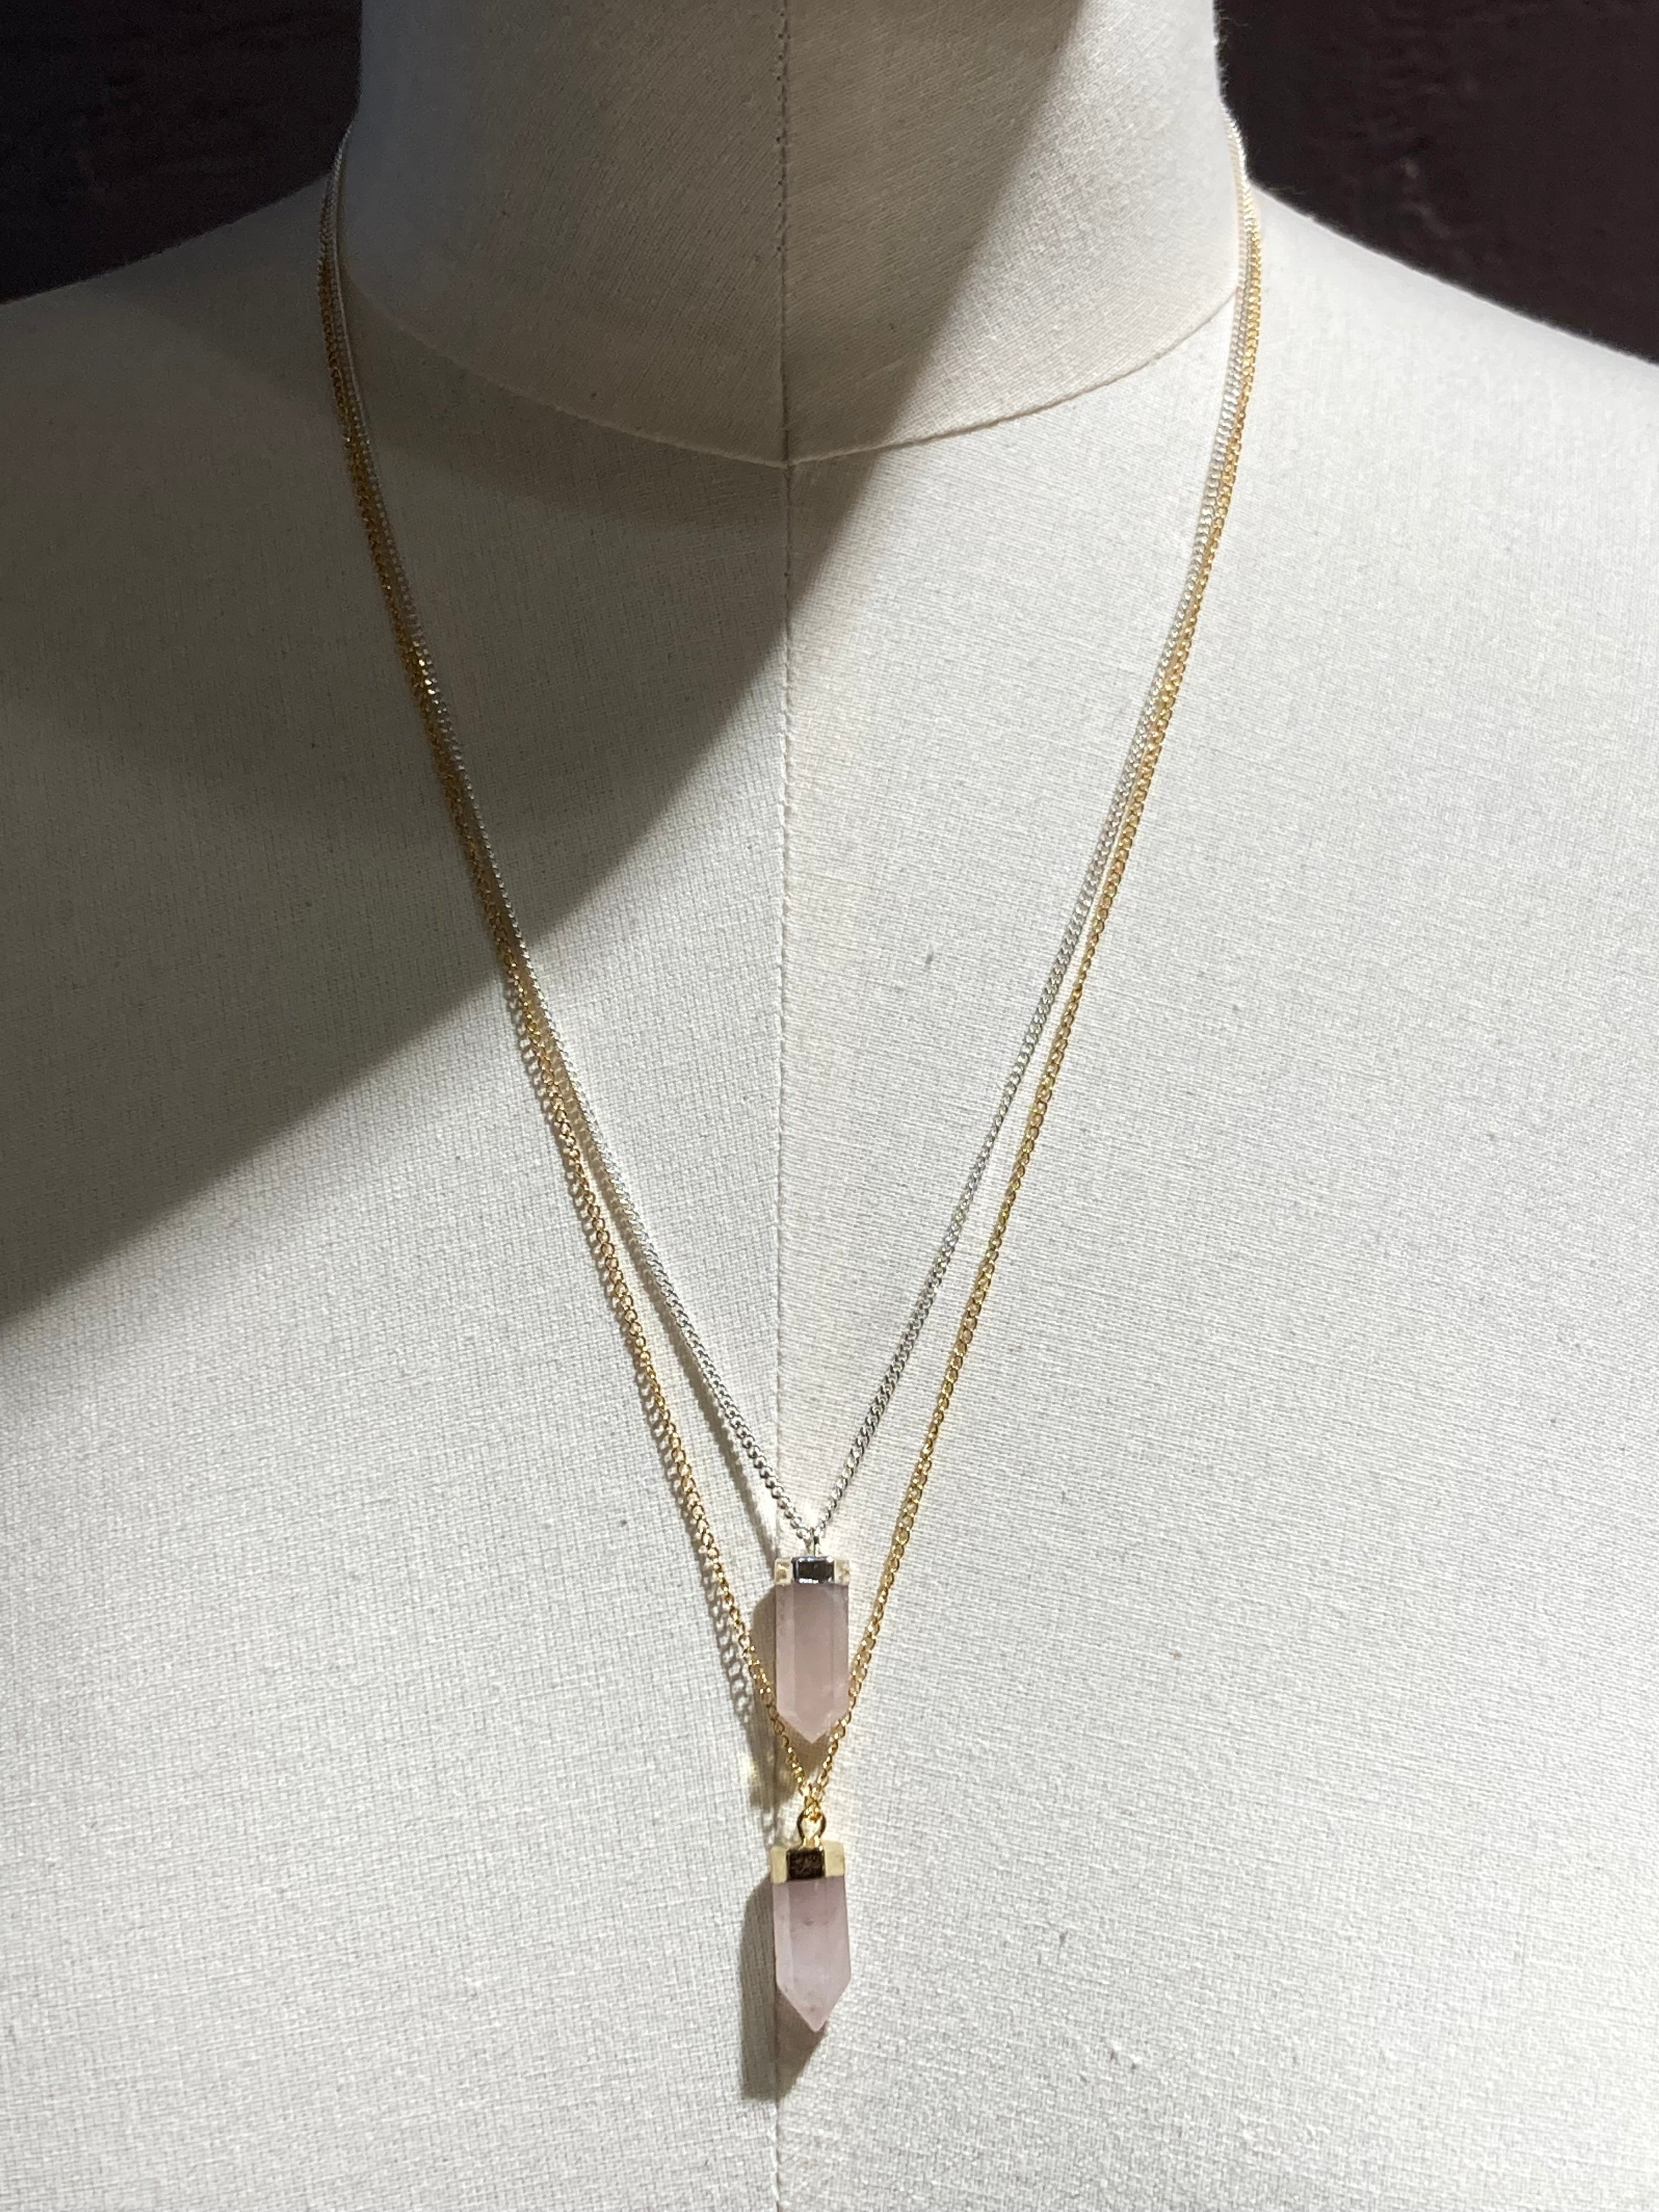 llayers-mens-women-jewelry-stone-rose-quartz-point-silver-gold-pendant-newyork-brooklyn-W1